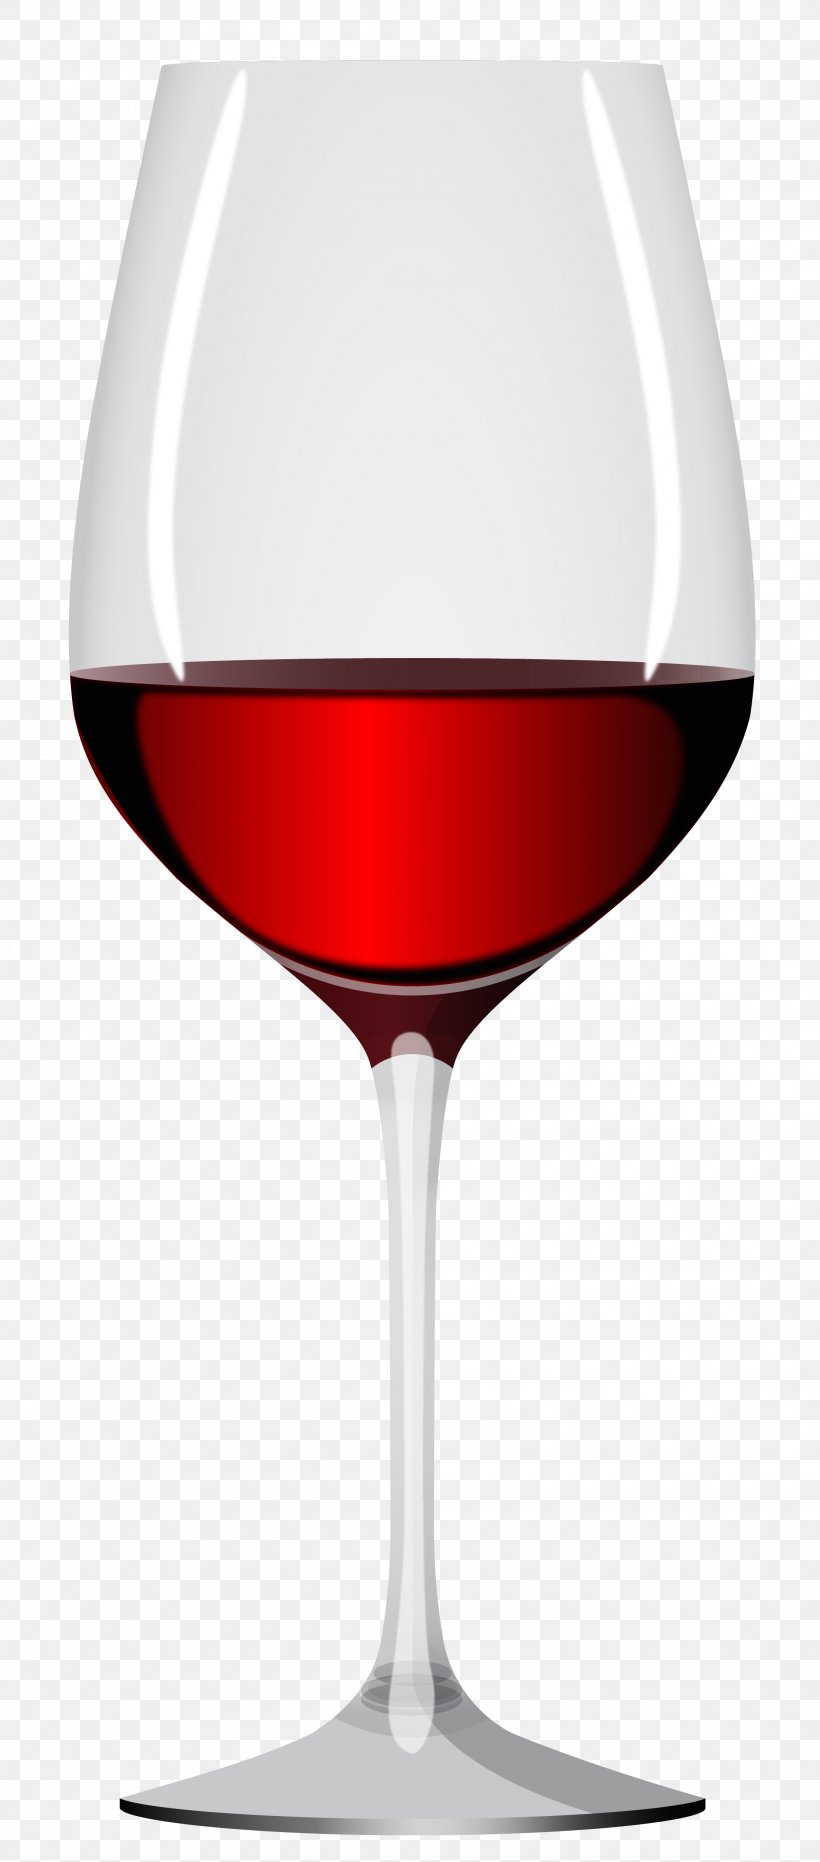 Red Wine Champagne Wine Glass Clip Art, 2210x5020px, Red Wine, Bottle, Champagne, Glass, Champagne